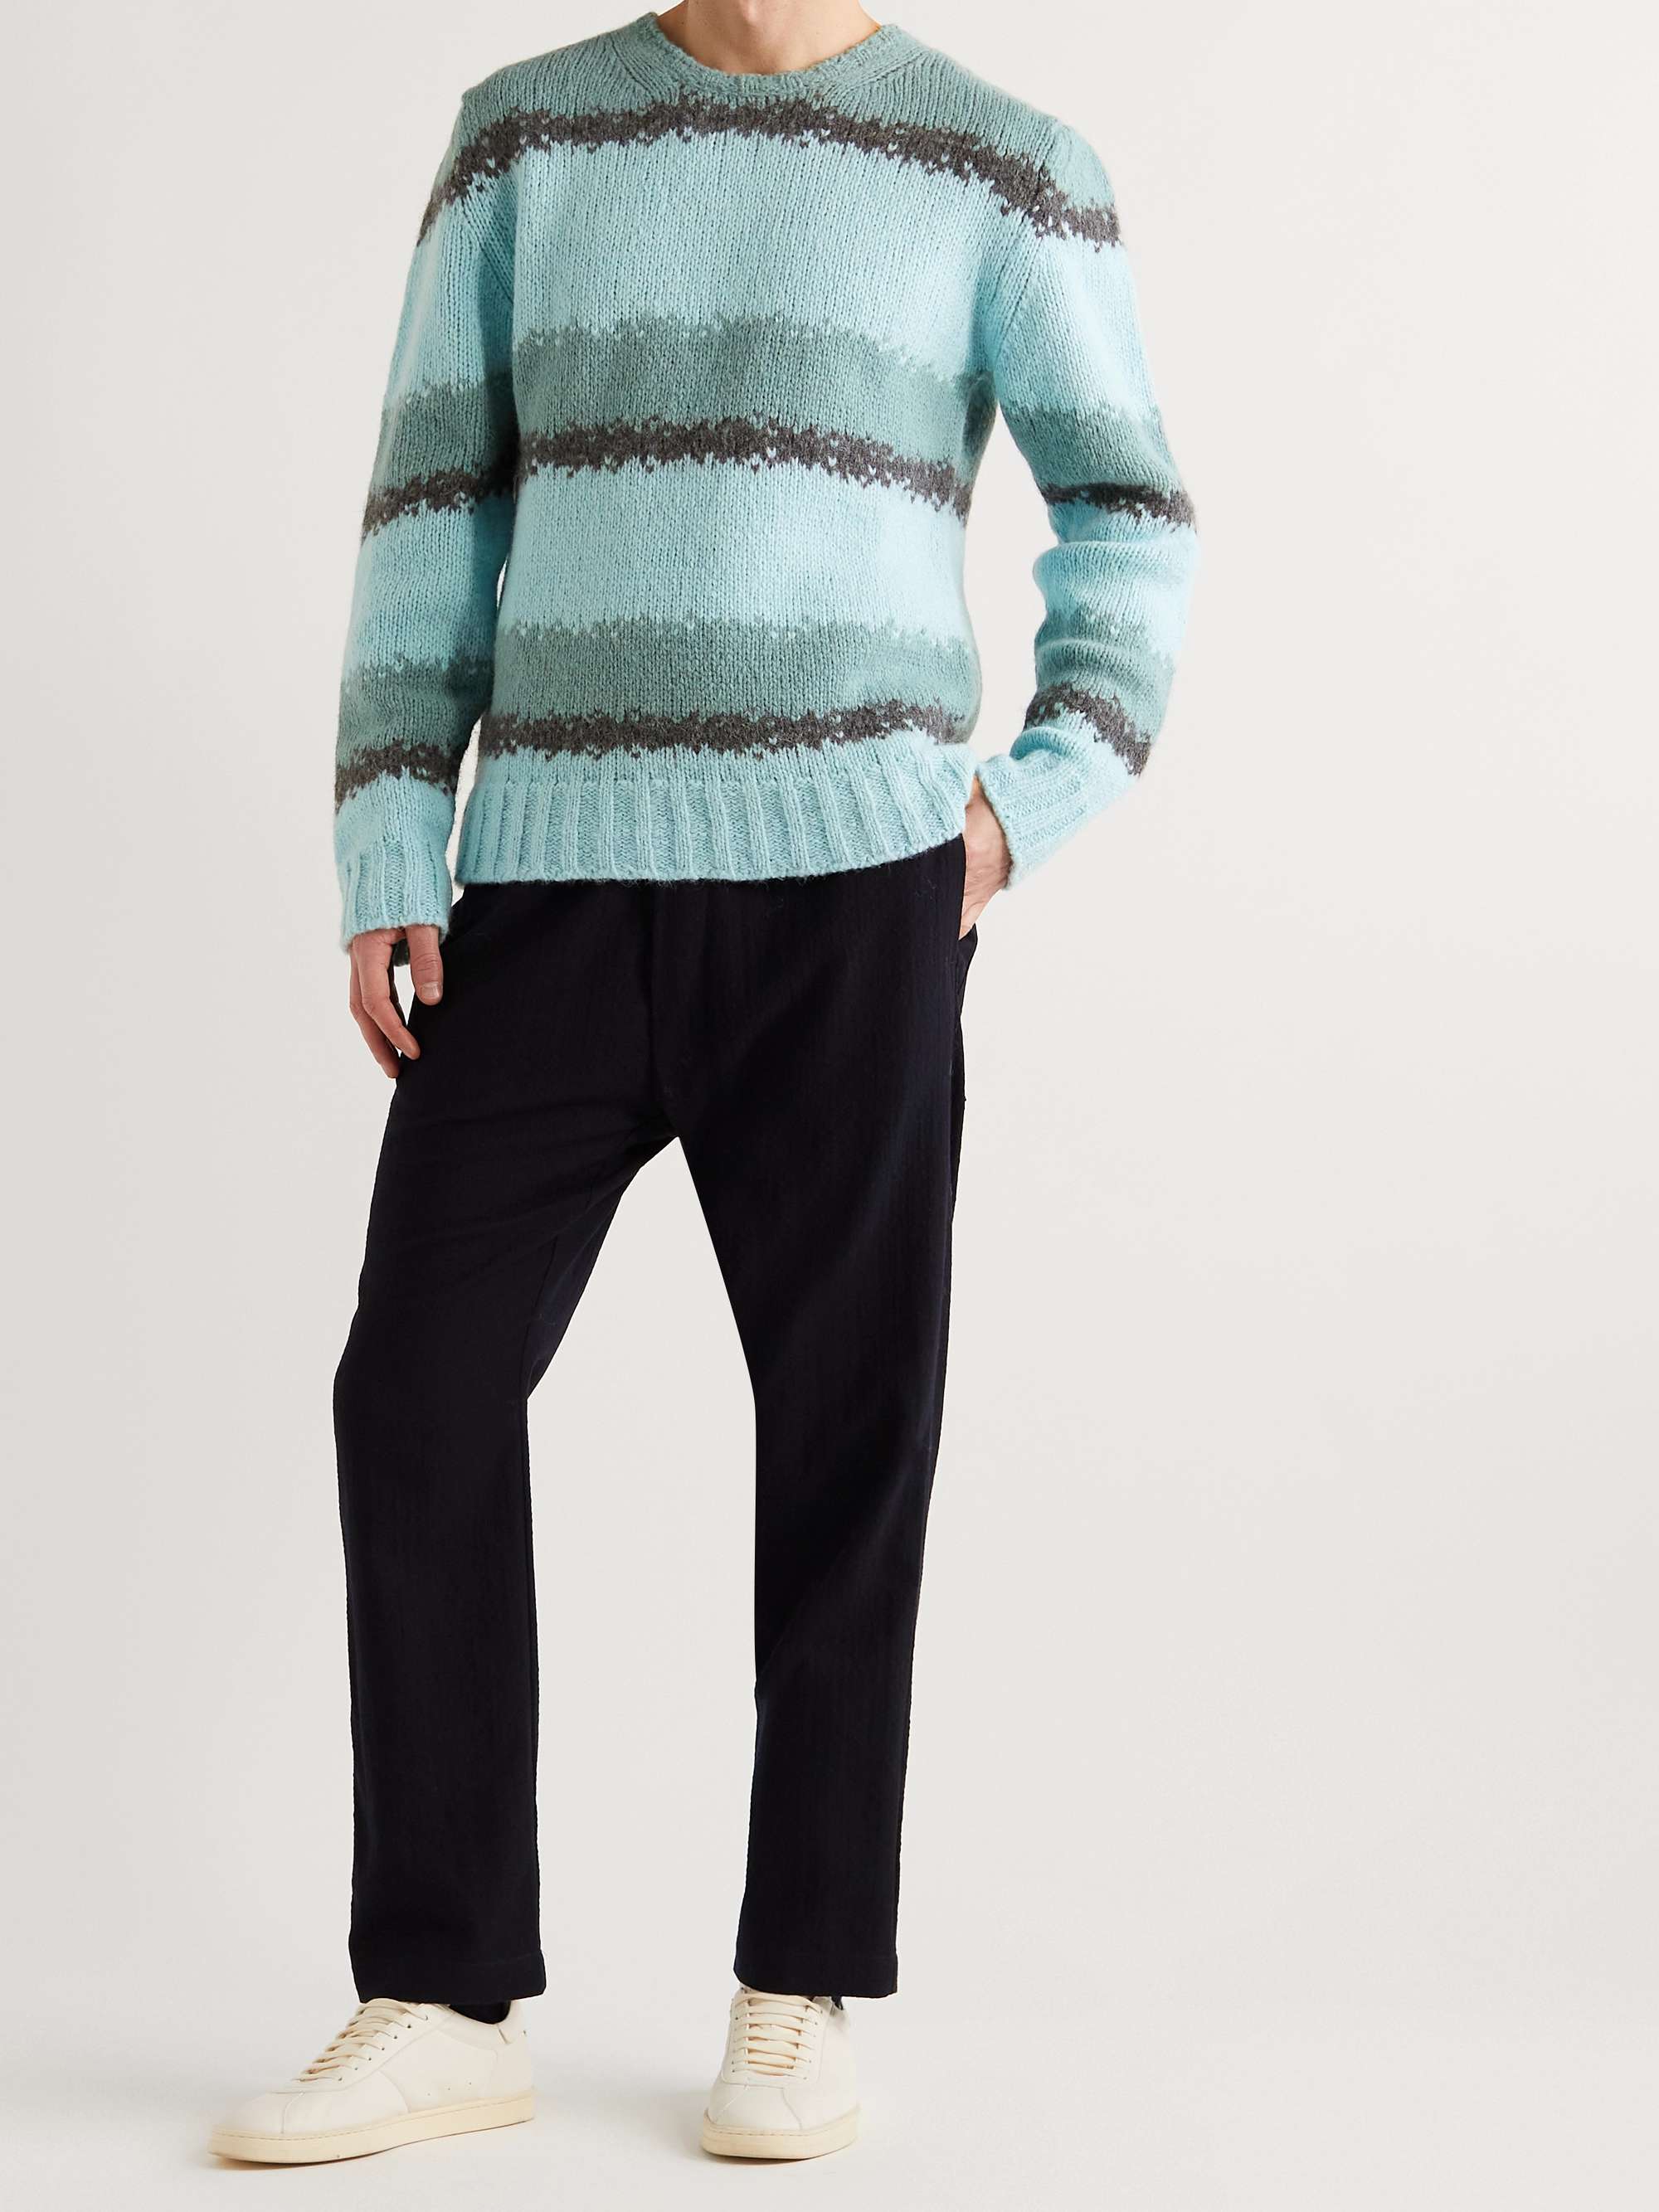 OFFICINE GENERALE Marco Striped Alpaca-Blend Sweater